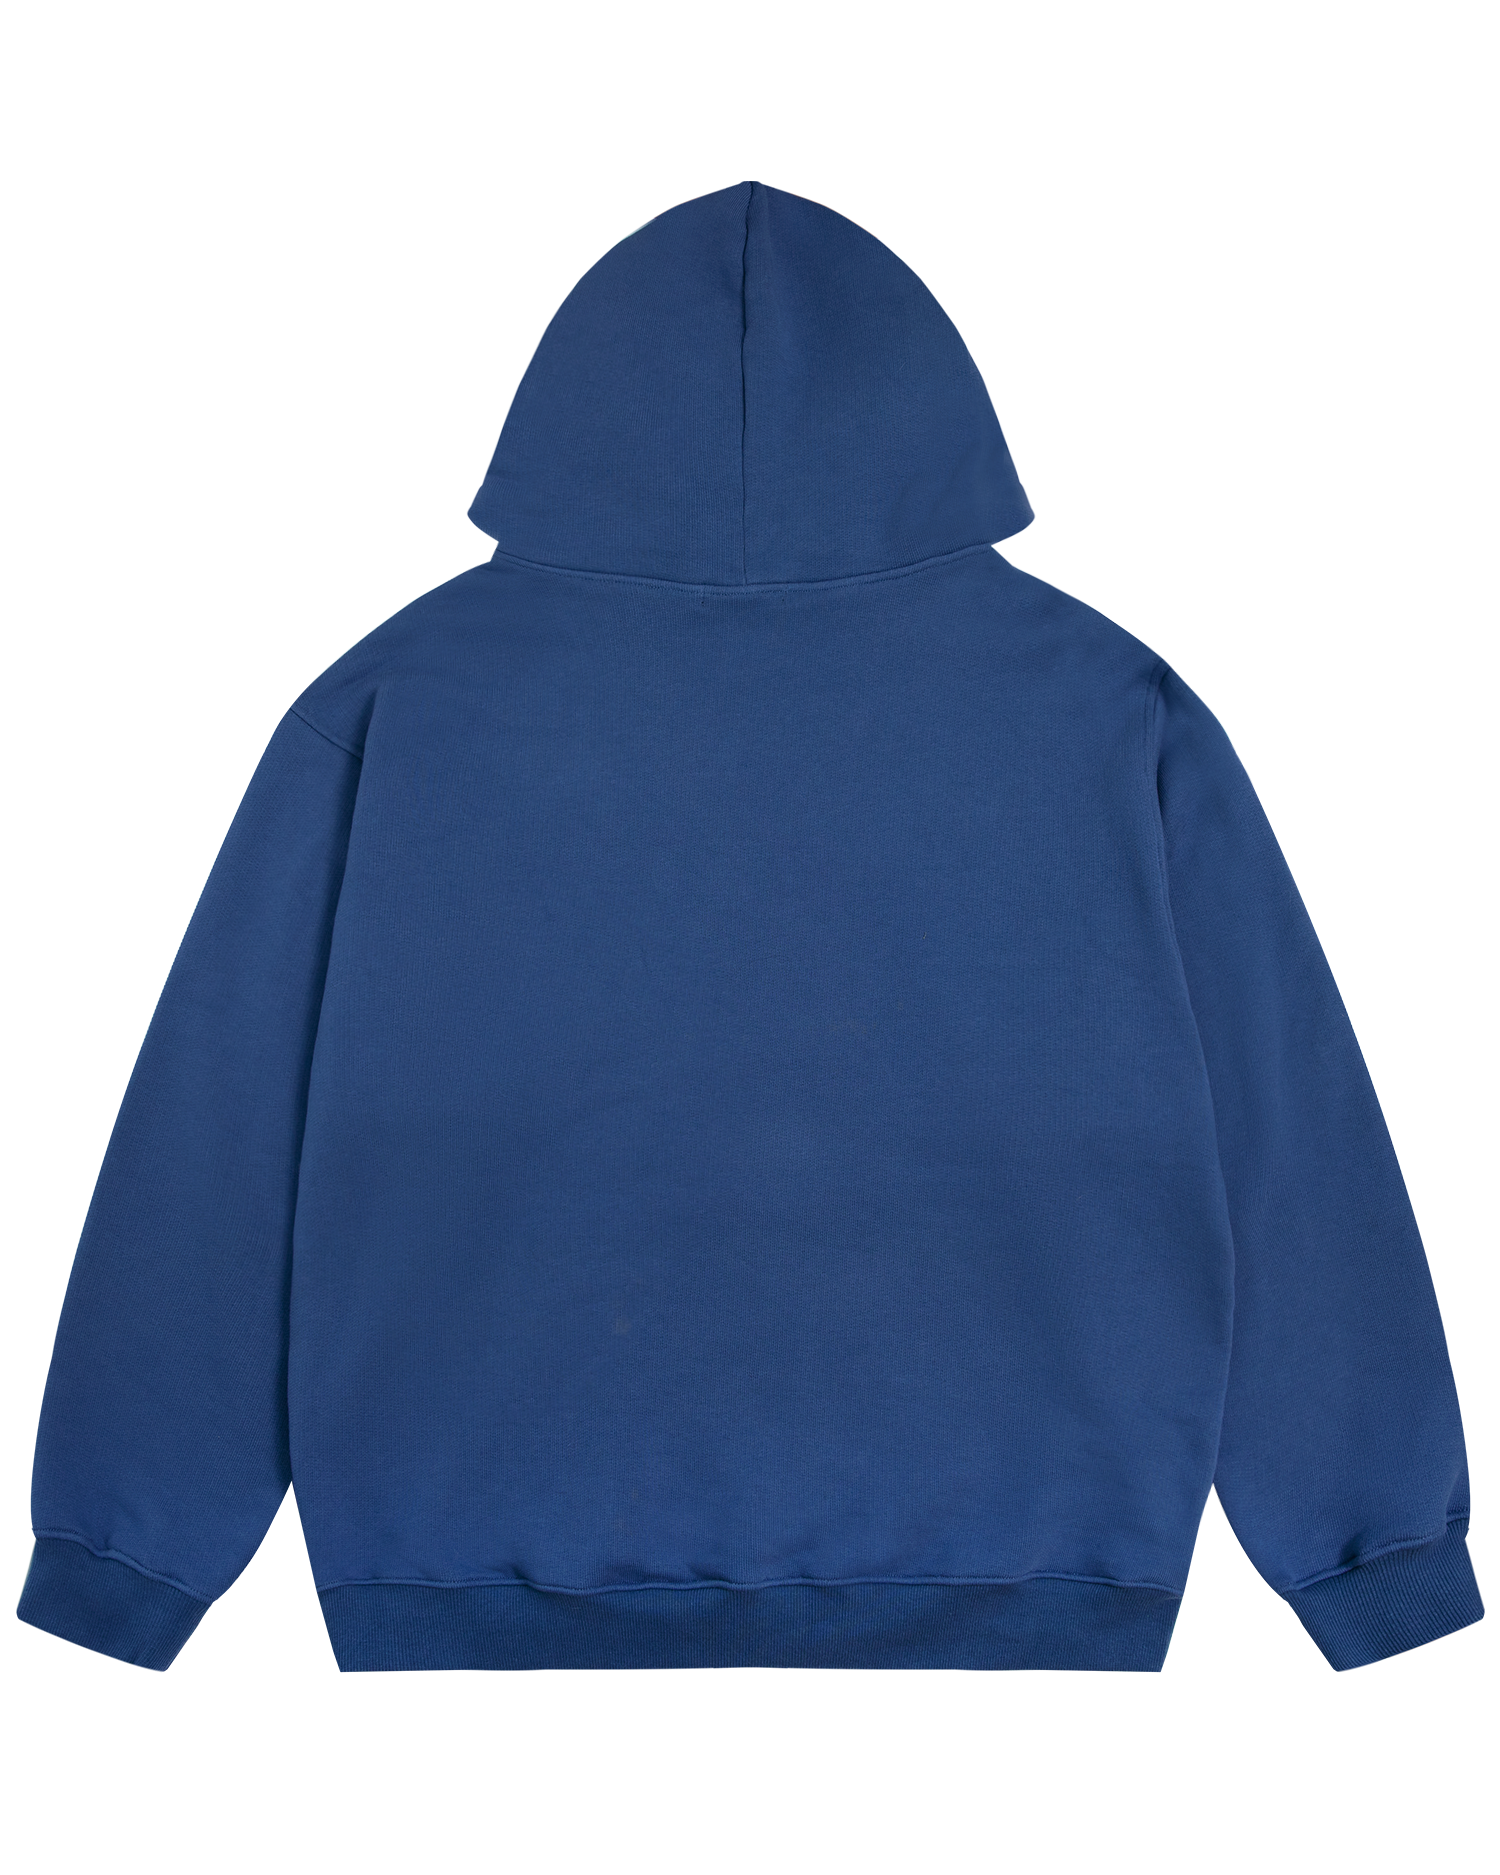 TAKA Original HOME collection on fire fleece hoodie blue